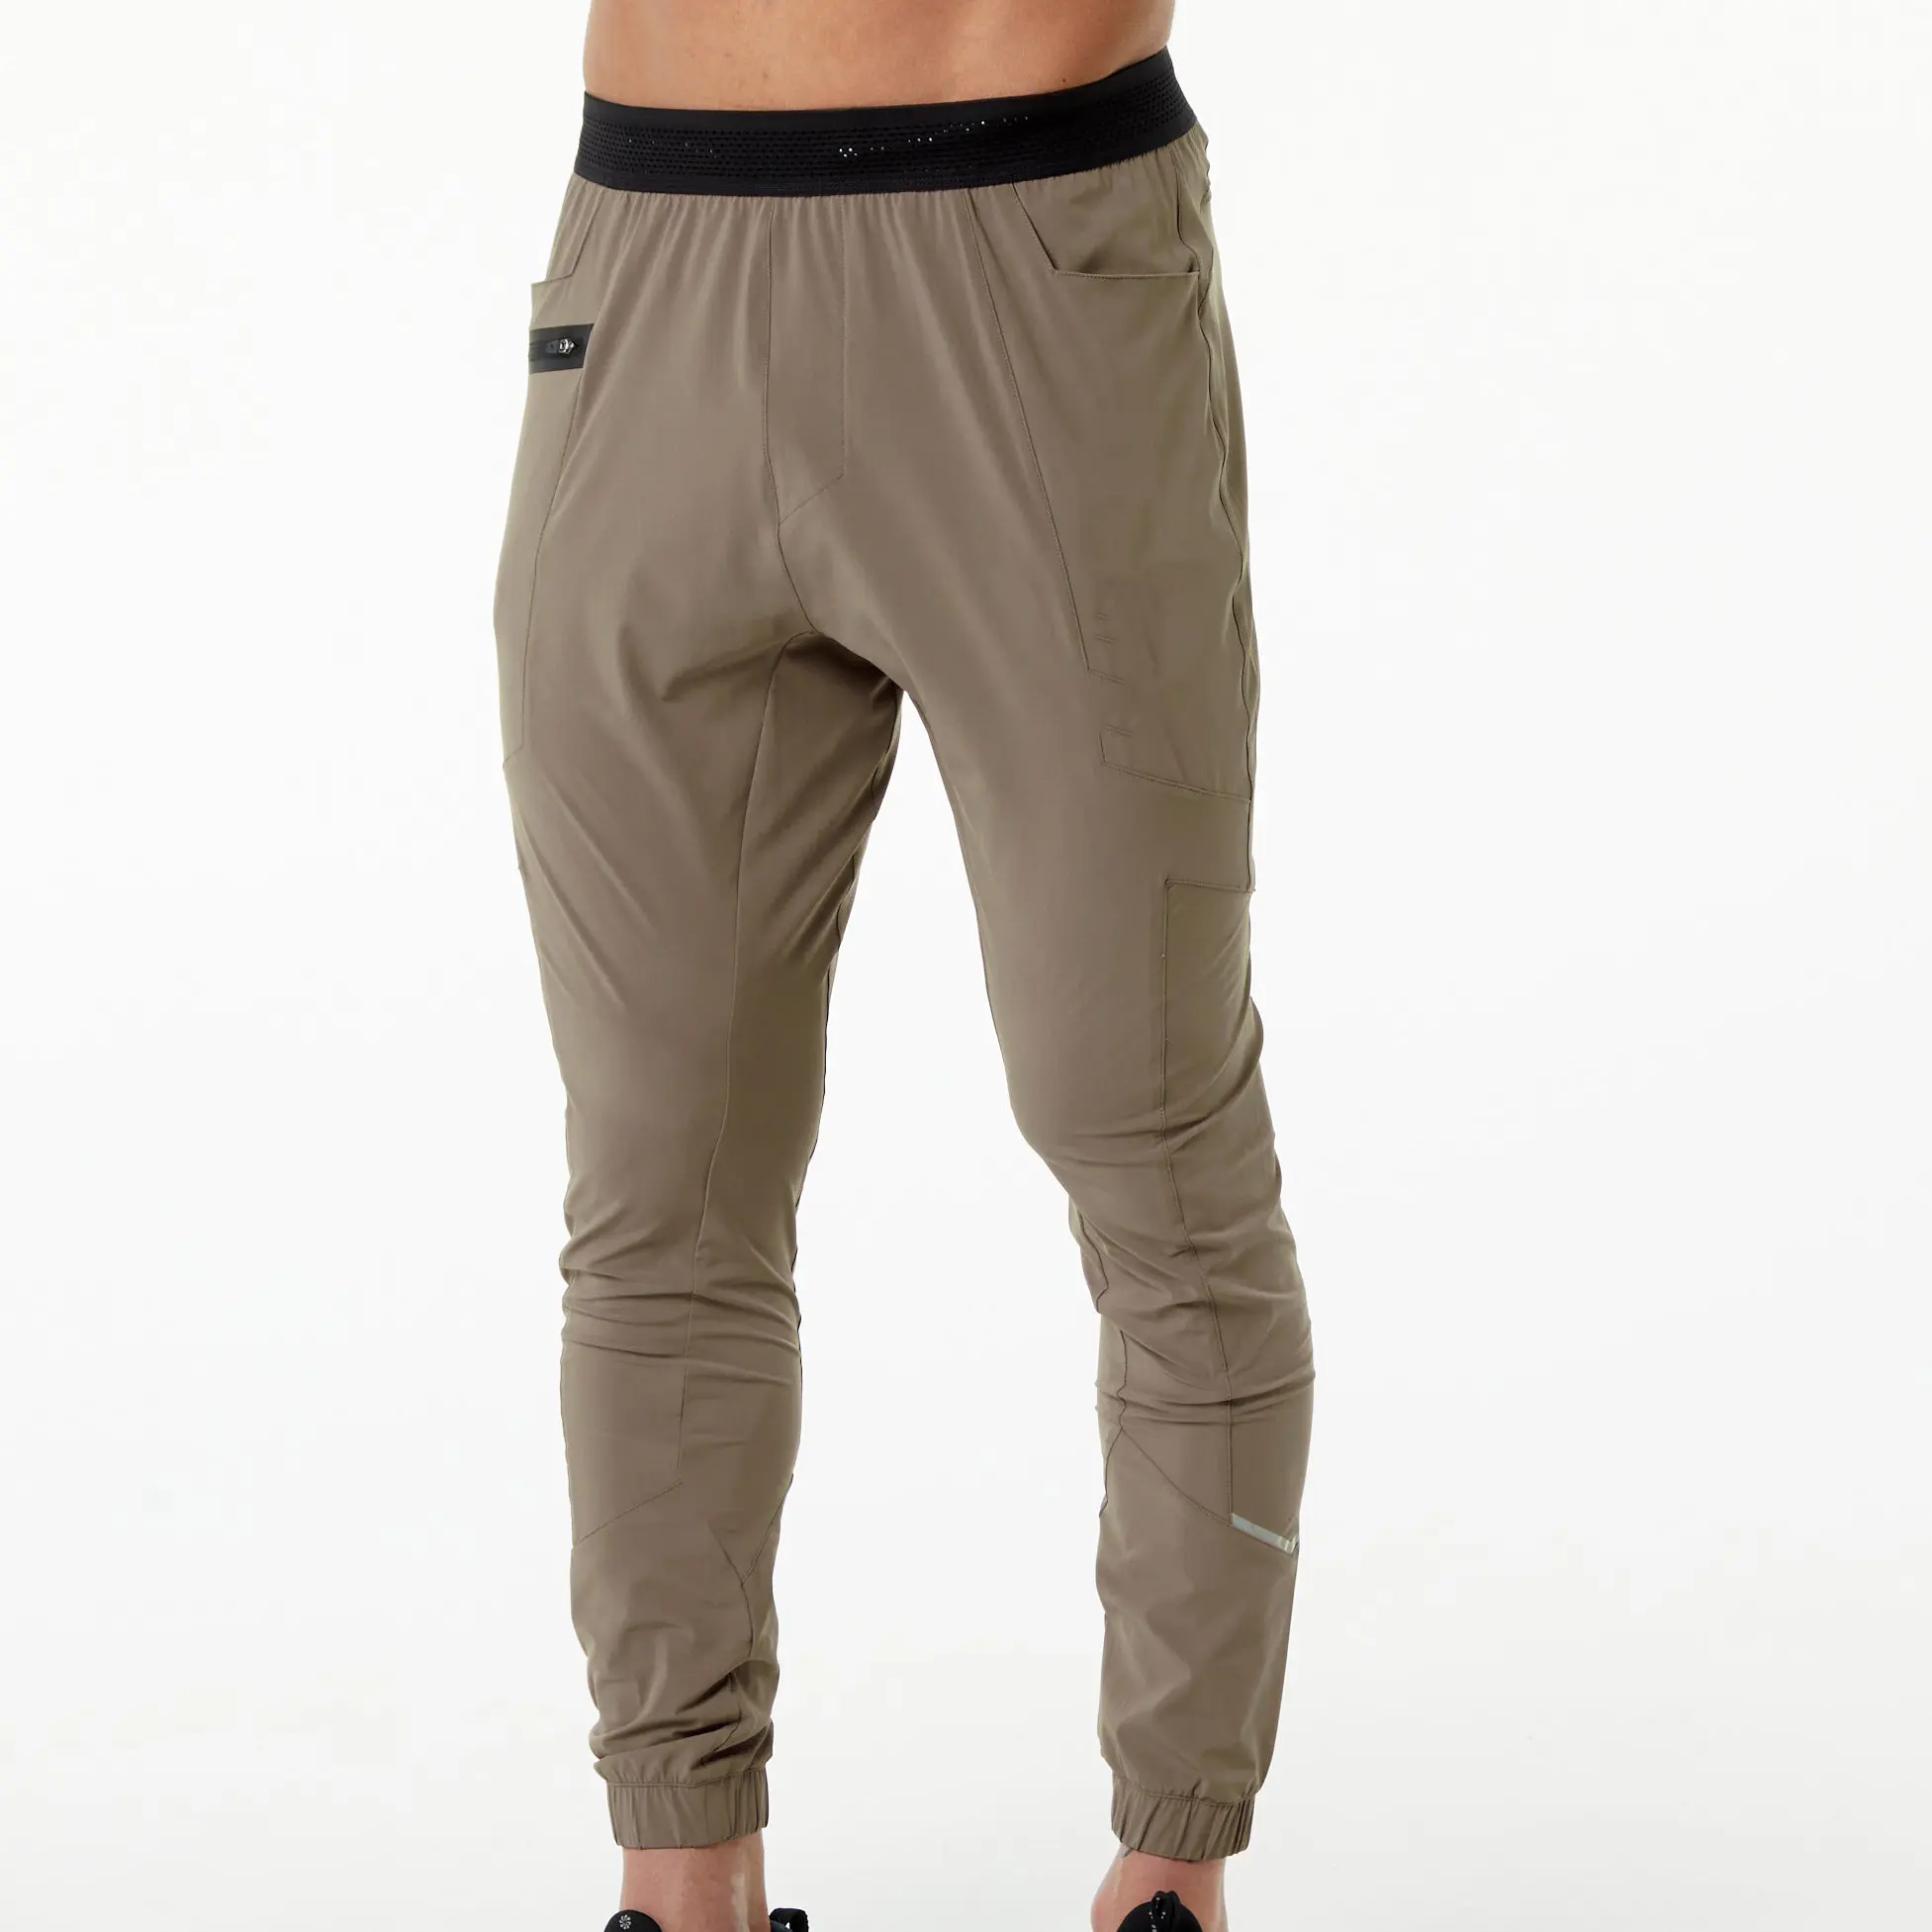 Celana Jogging olahraga pria, Bawahan kasual Mode dengan saku Zippo regang tinggi